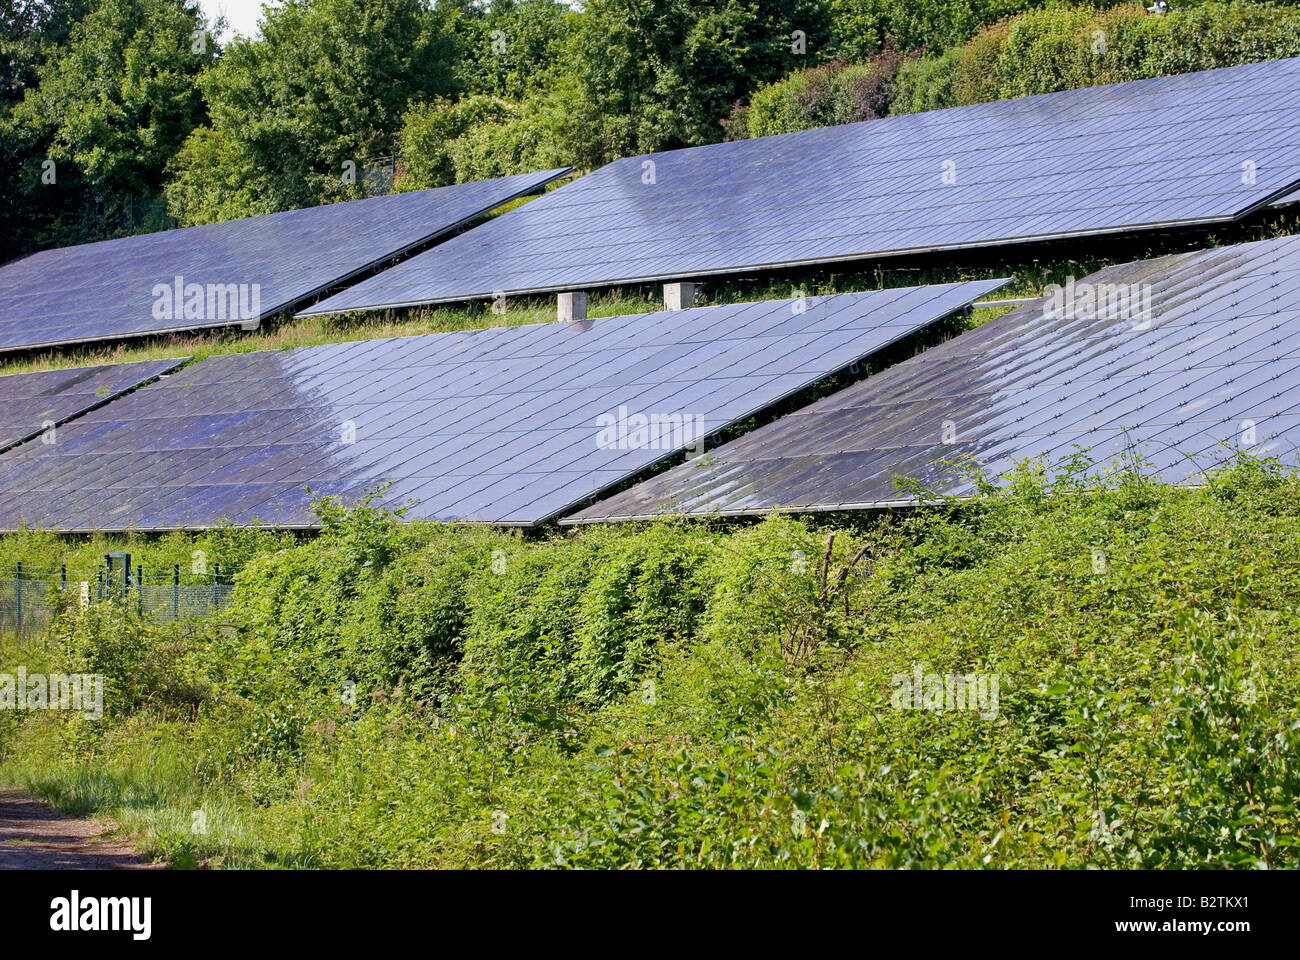 Solar power station owned by RWE Energy, Neurath, Grevenbroich, North Rhine-Westphalia, Germany. Stock Photo